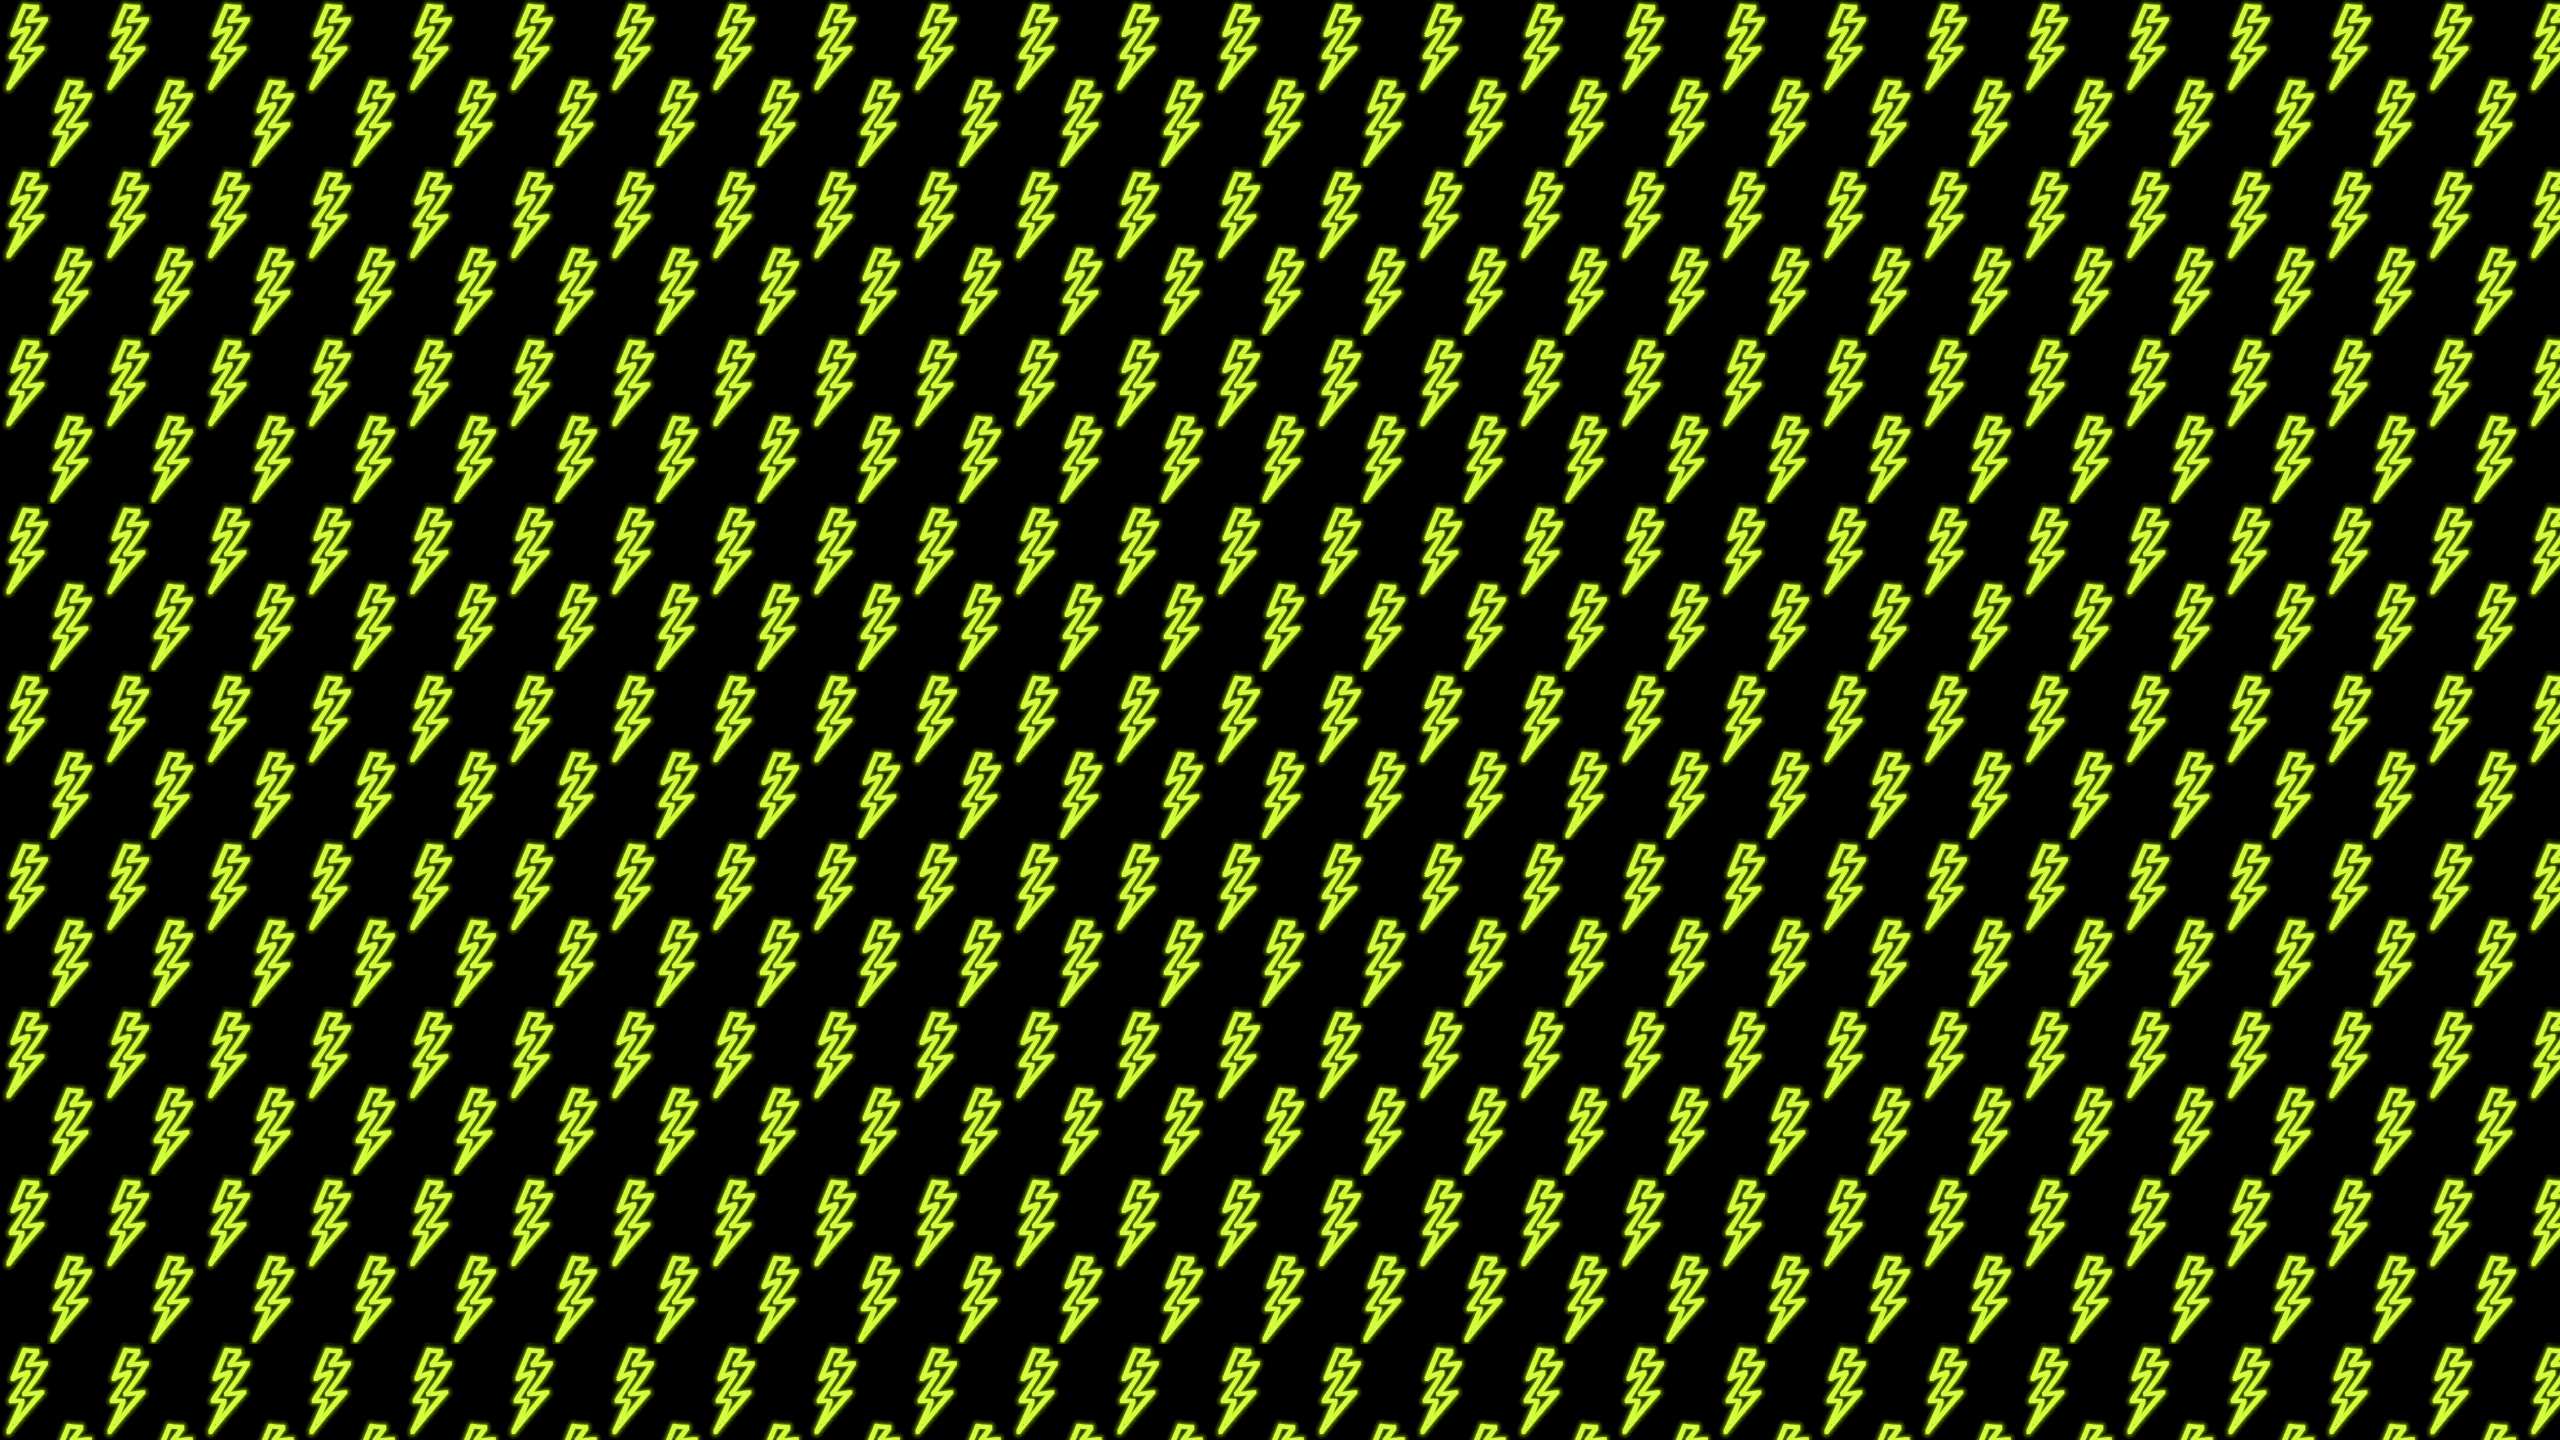 Neon Green Background Tumblr Wallpaper, Funny Tumblr Wallpaper and Skeleton Tumblr Wallpaper